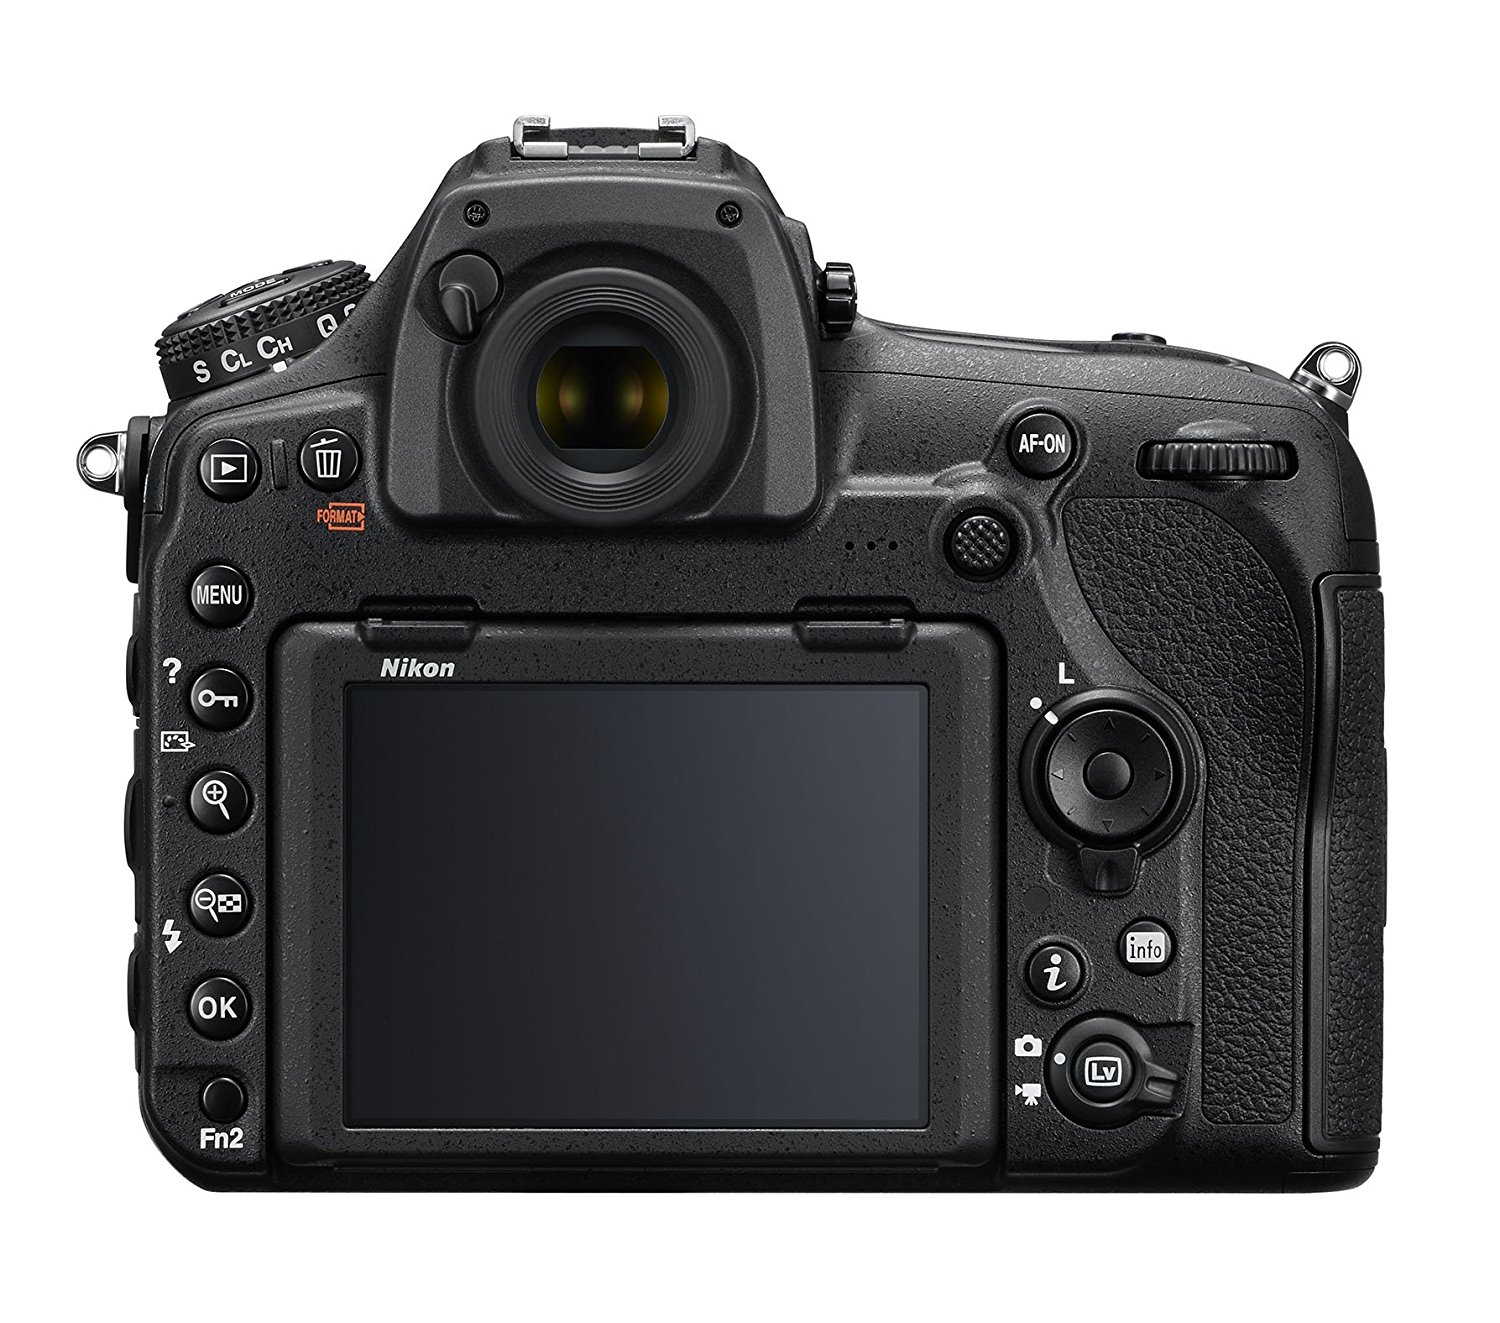 New Nikon D850 FX-format Digital SLR Camera best model 2017 - Smart Zone